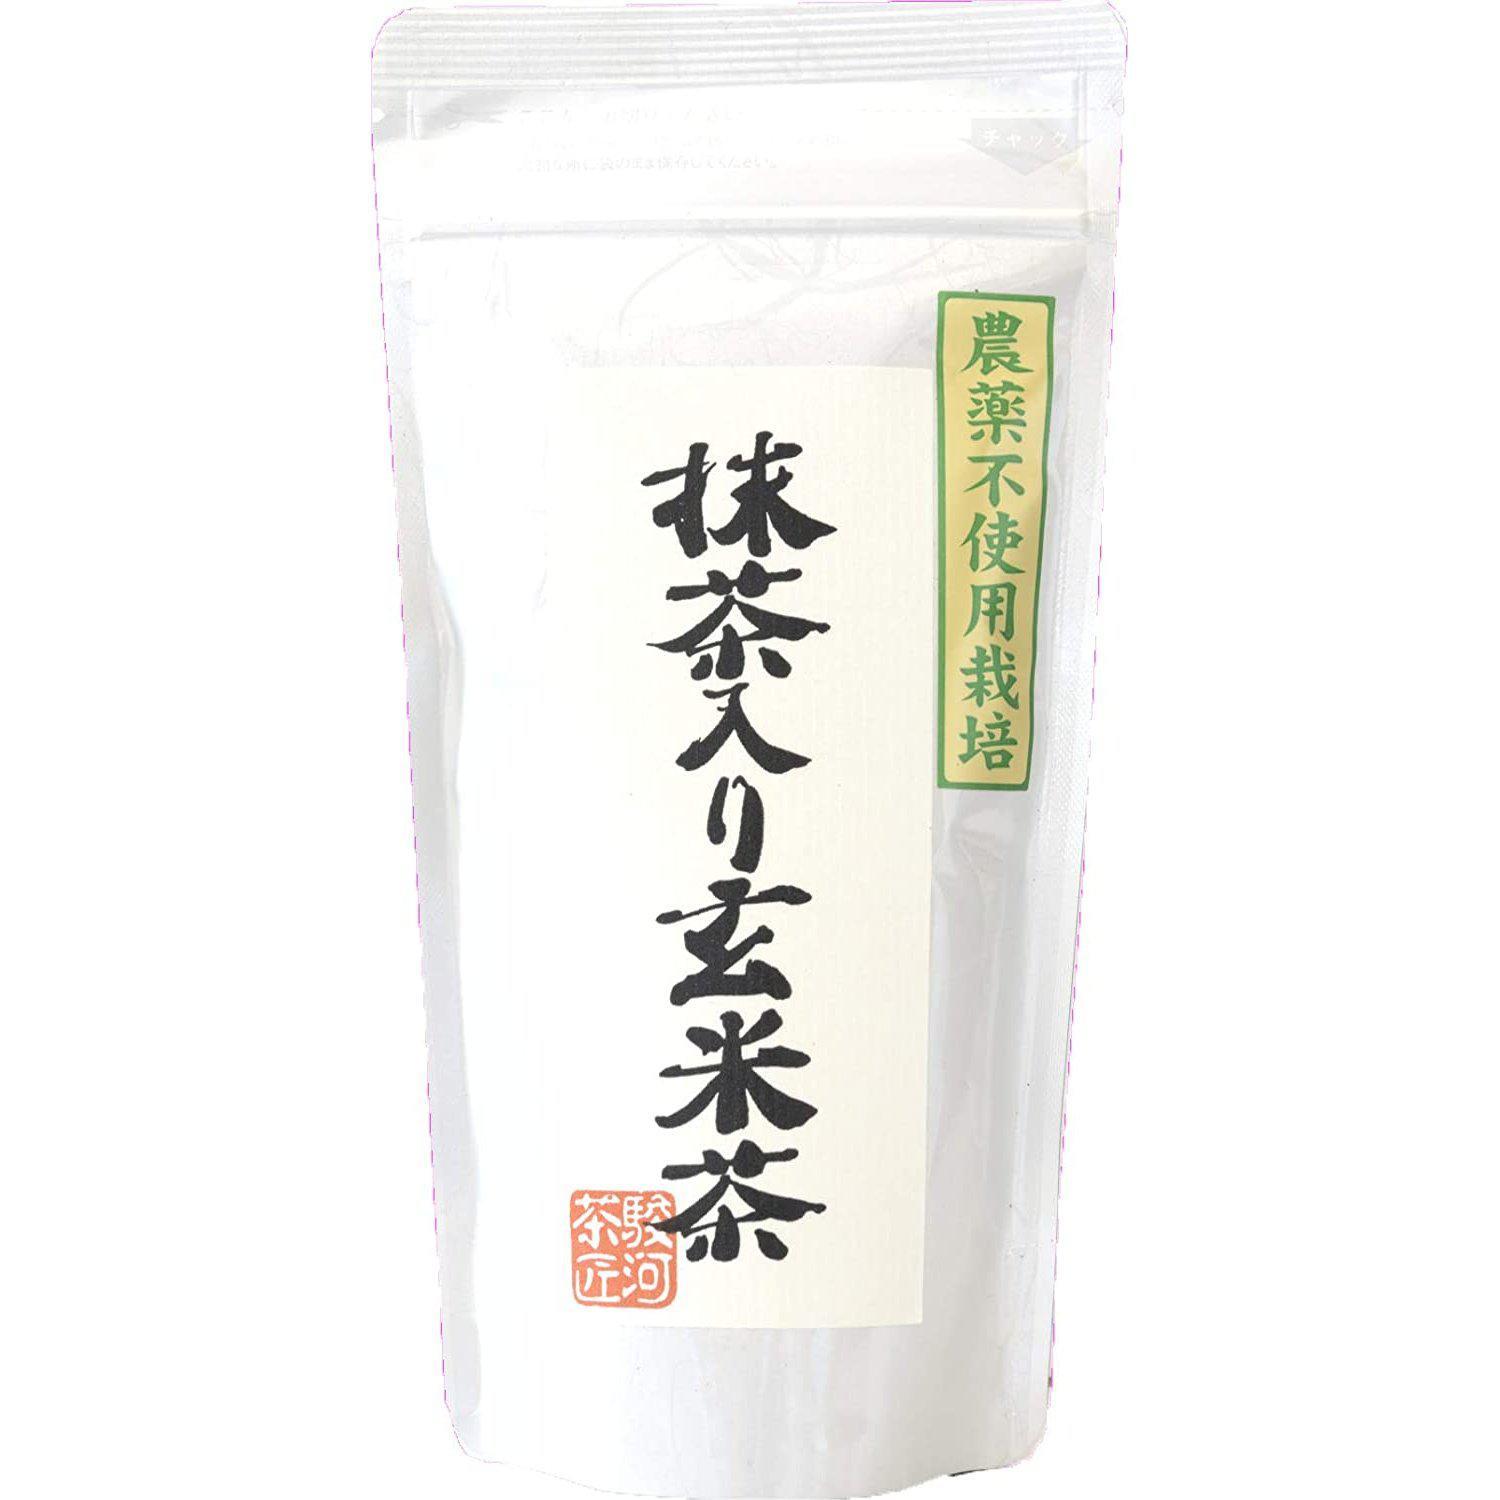 Hagiri Organic Genmaicha Green Tea with Roasted Rice 100g, Japanese Taste